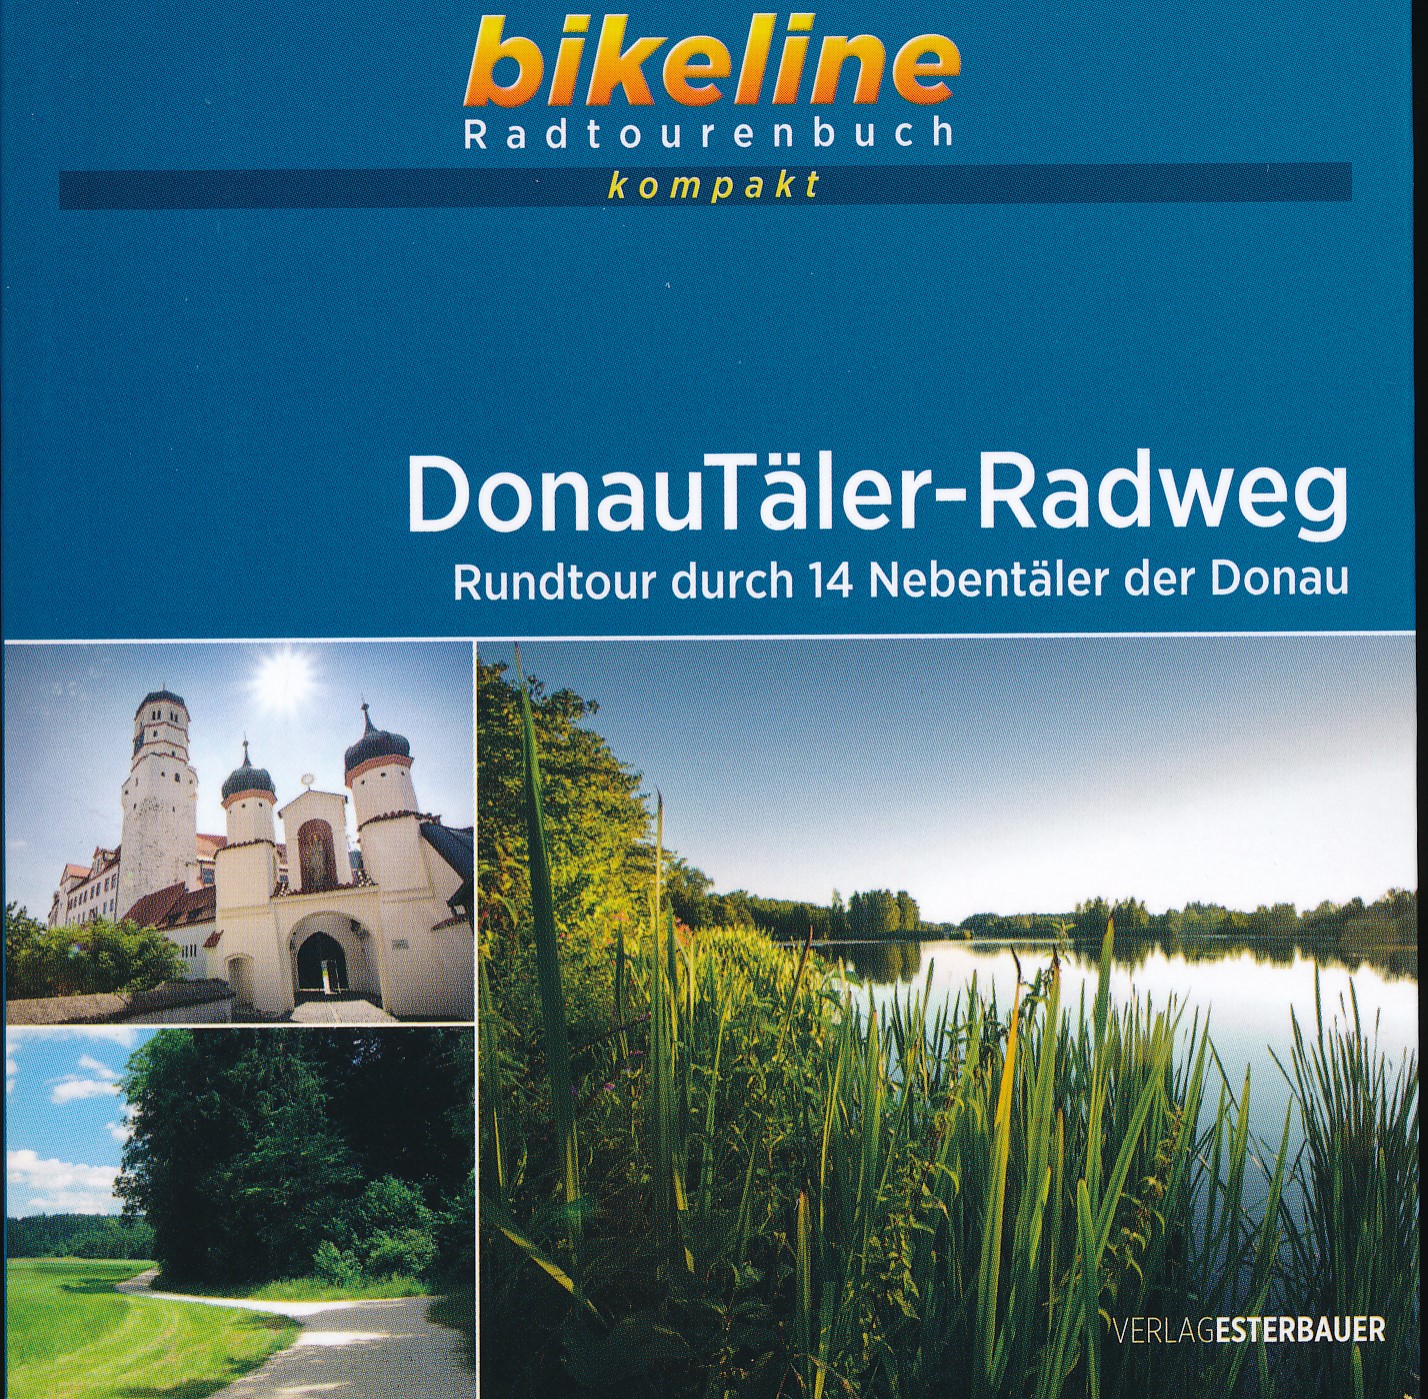 Online bestellen: Fietsgids Bikeline Radtourenbuch kompakt DonauTäler-Radweg | Esterbauer